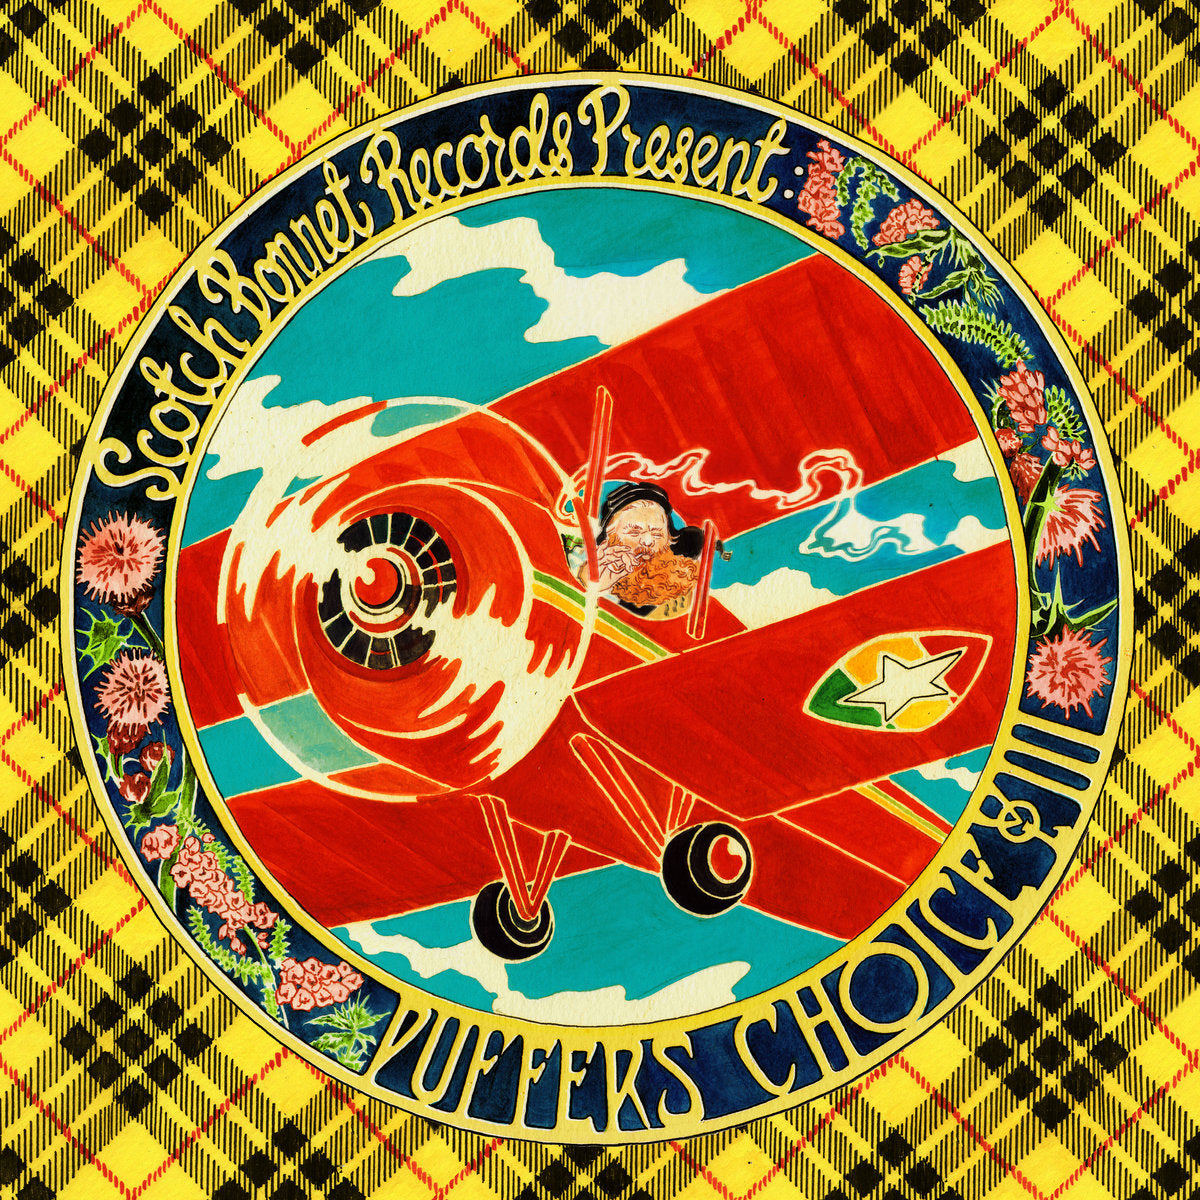 VARIOUS ARTISTS - Scotch Bonnet Presents Puffers Choice Vol. 3 - LP - Vinyl